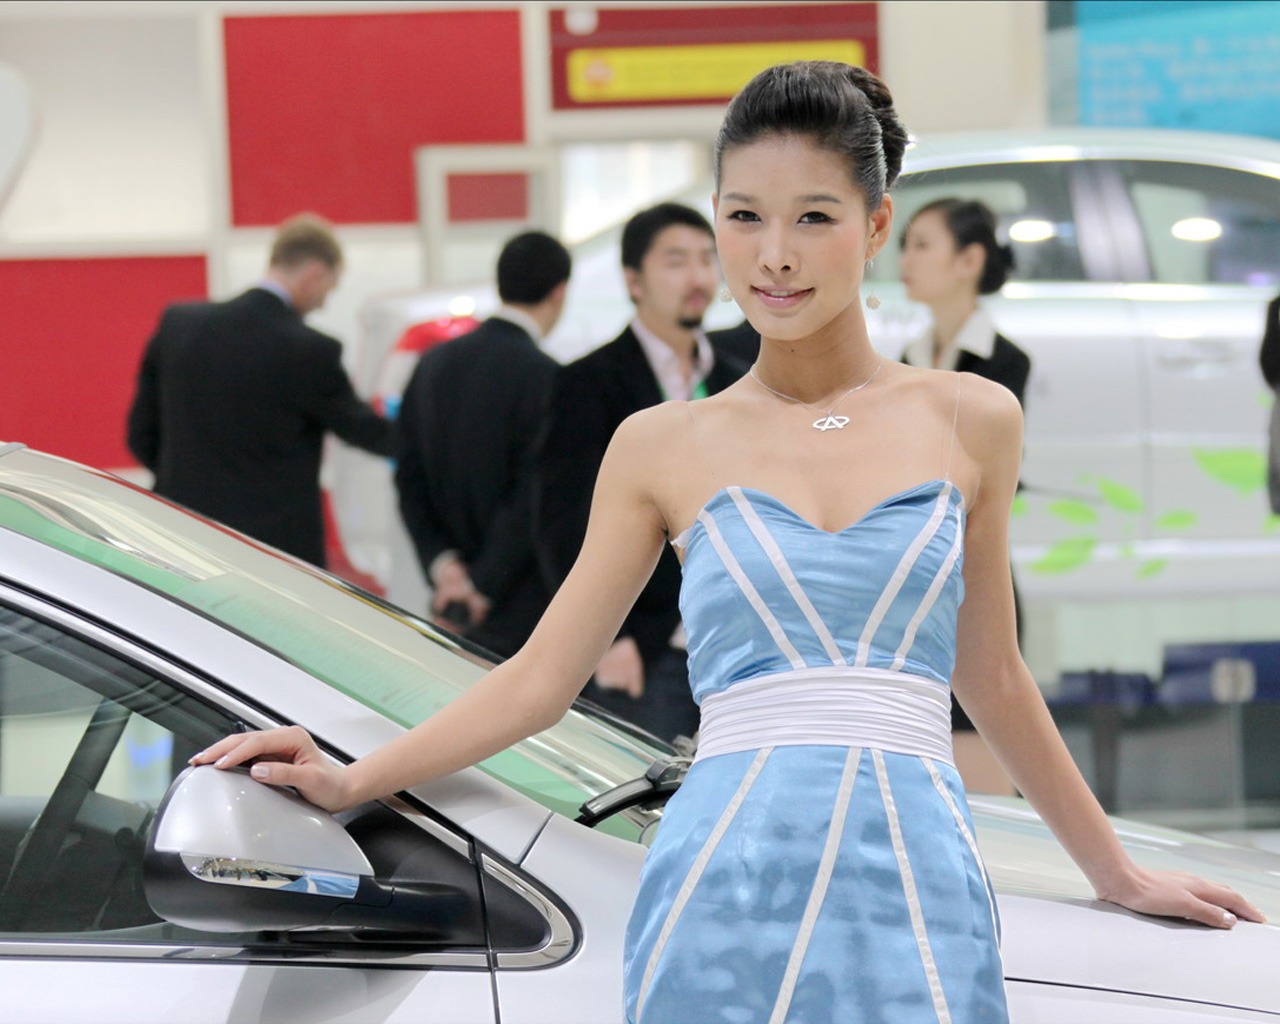 24/04/2010 Beijing International Auto Show (Linquan Qing Yun trabaja) #8 - 1280x1024